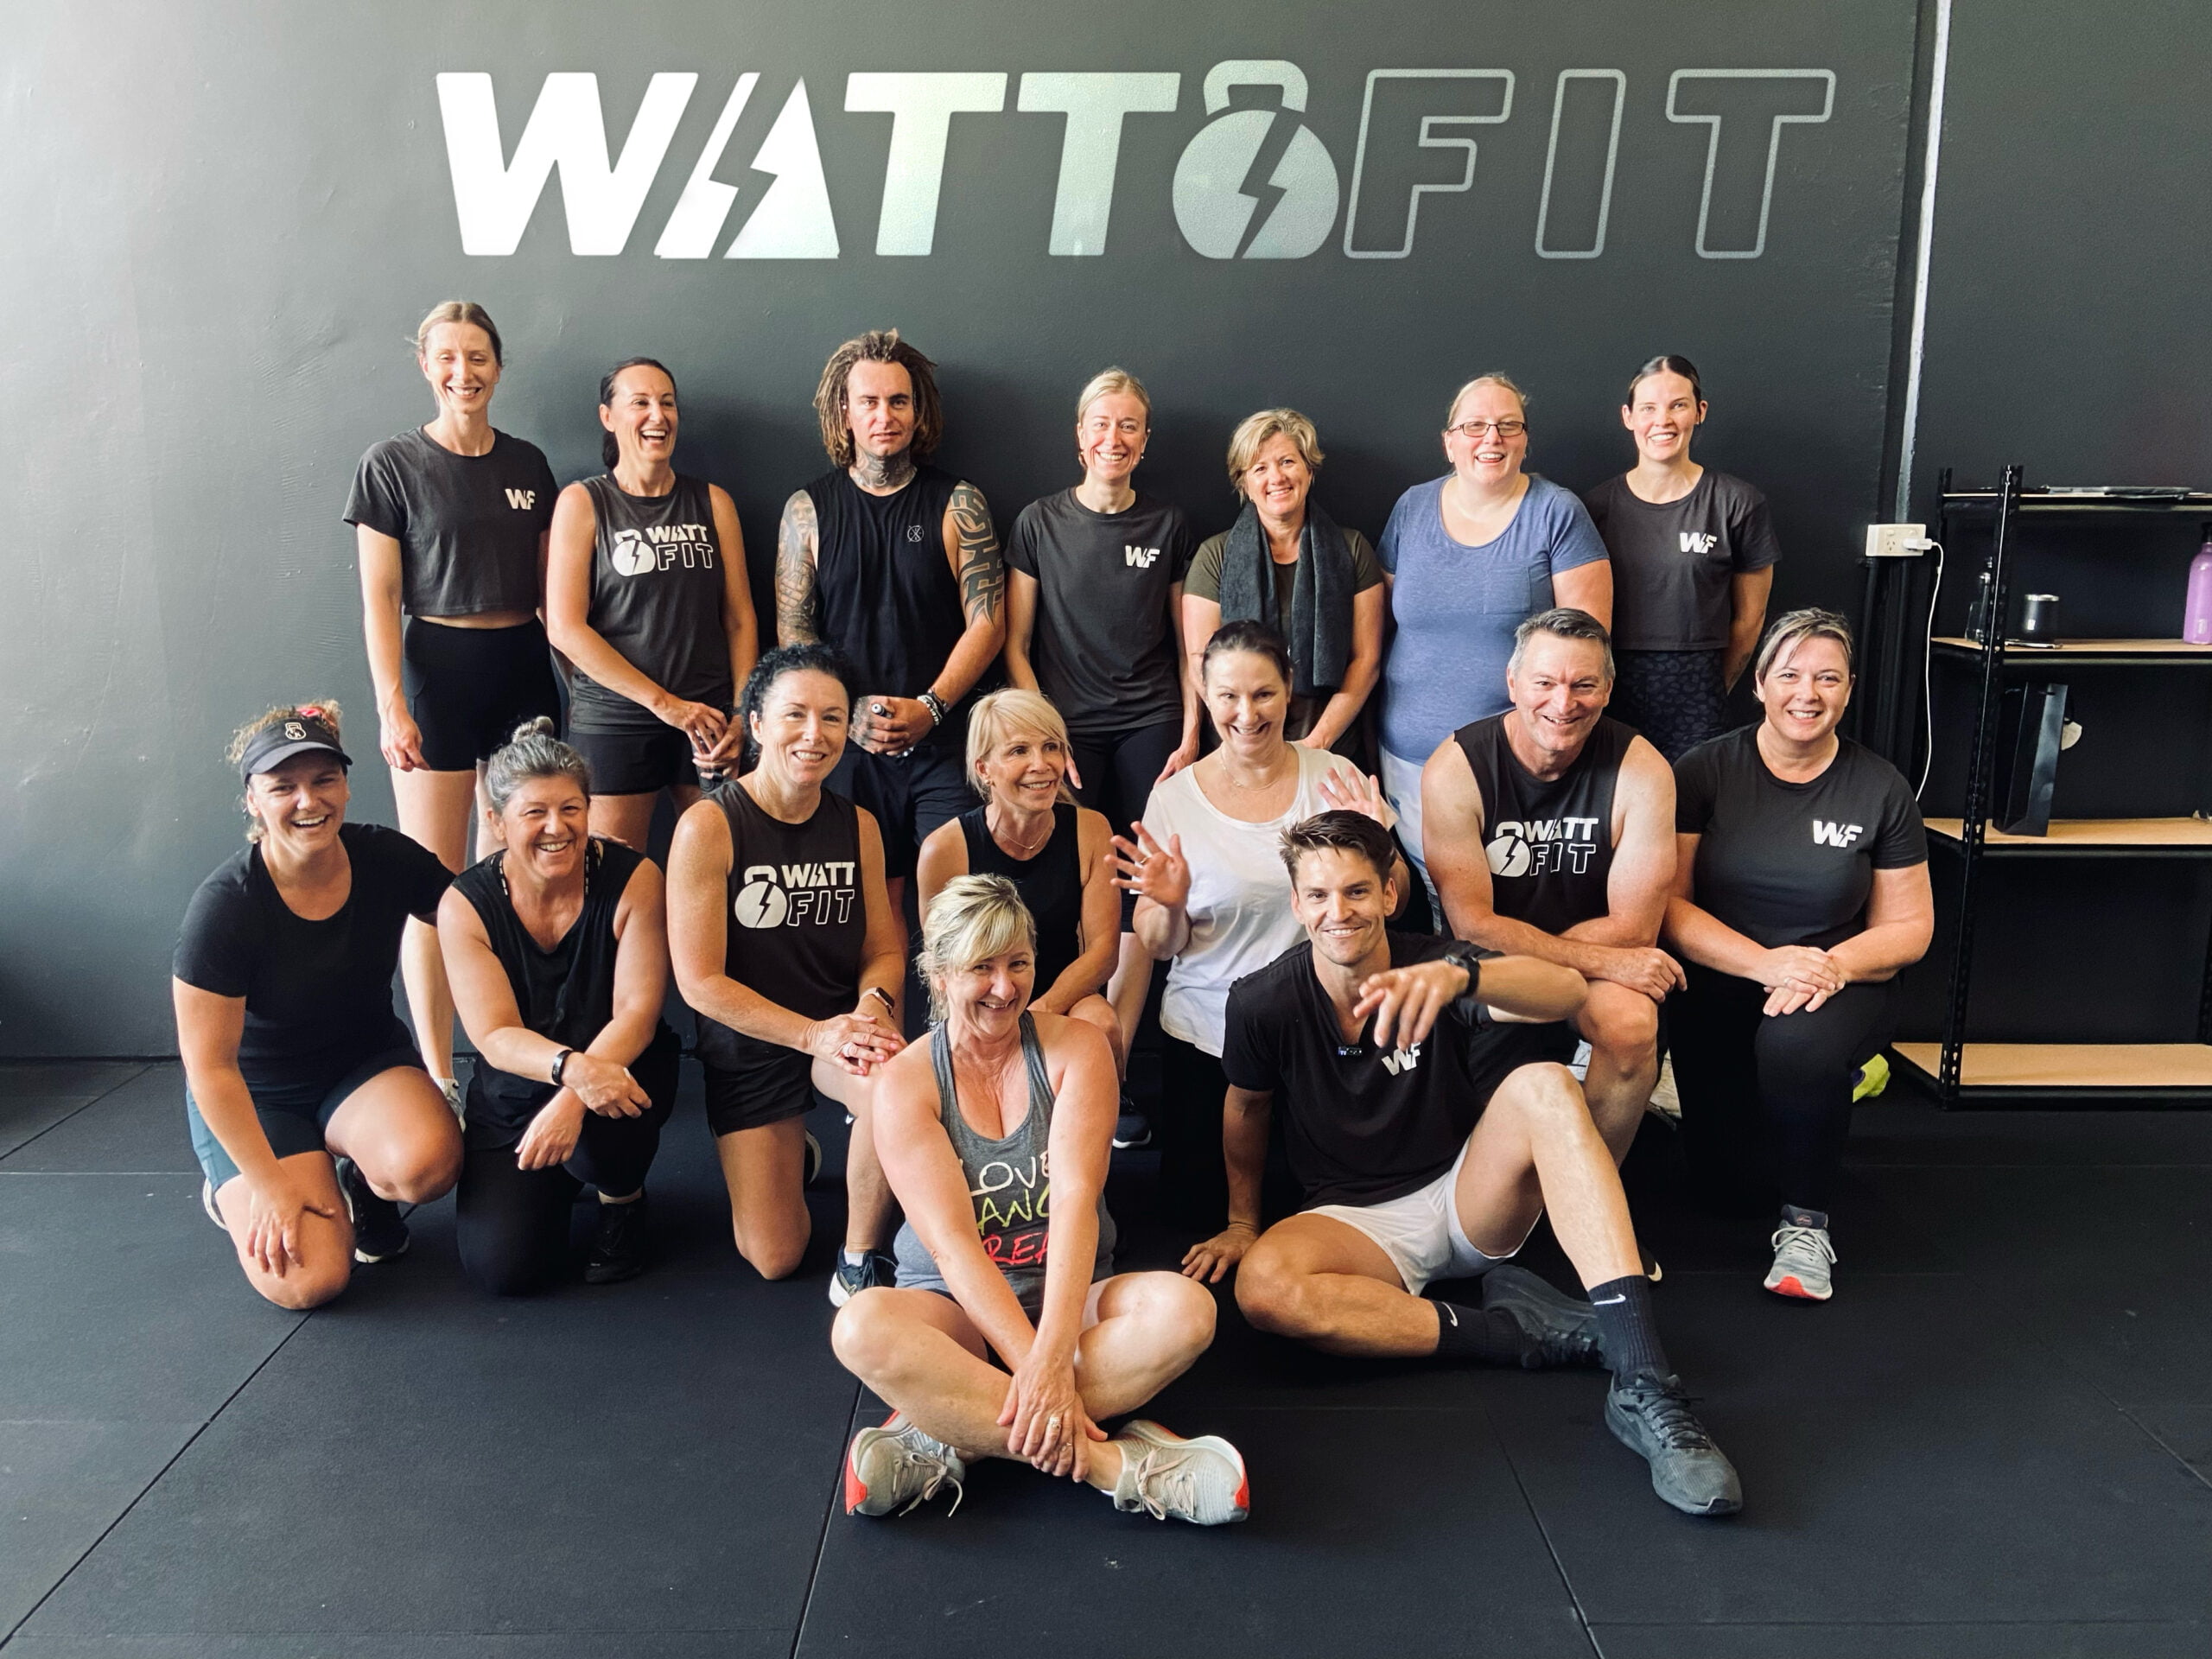 Wattfit group training class photo after a workout